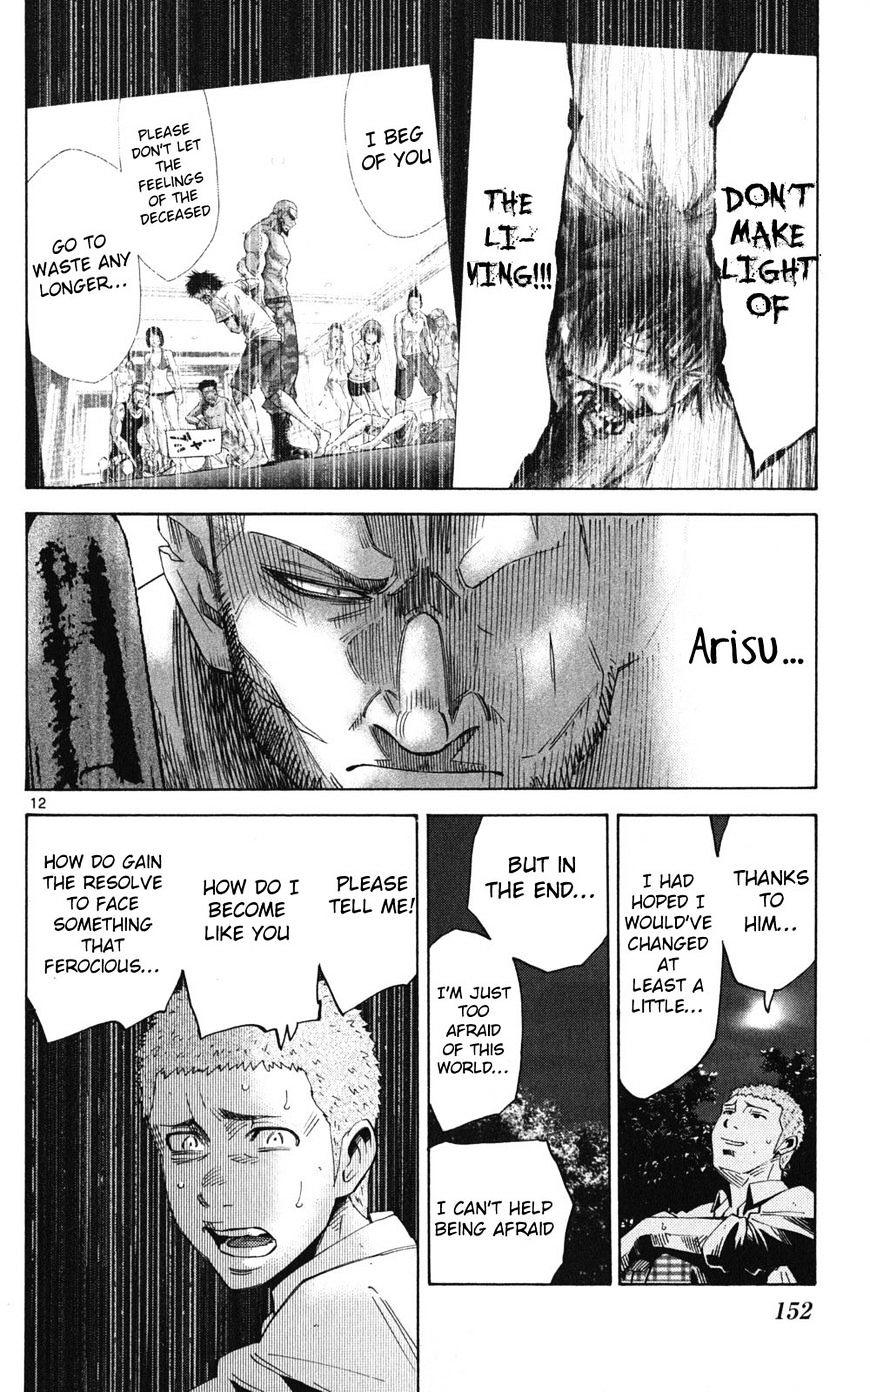 Imawa No Kuni No Alice Chapter 49.2 : Side Story 5 - King Of Spades (2) page 12 - Mangakakalot